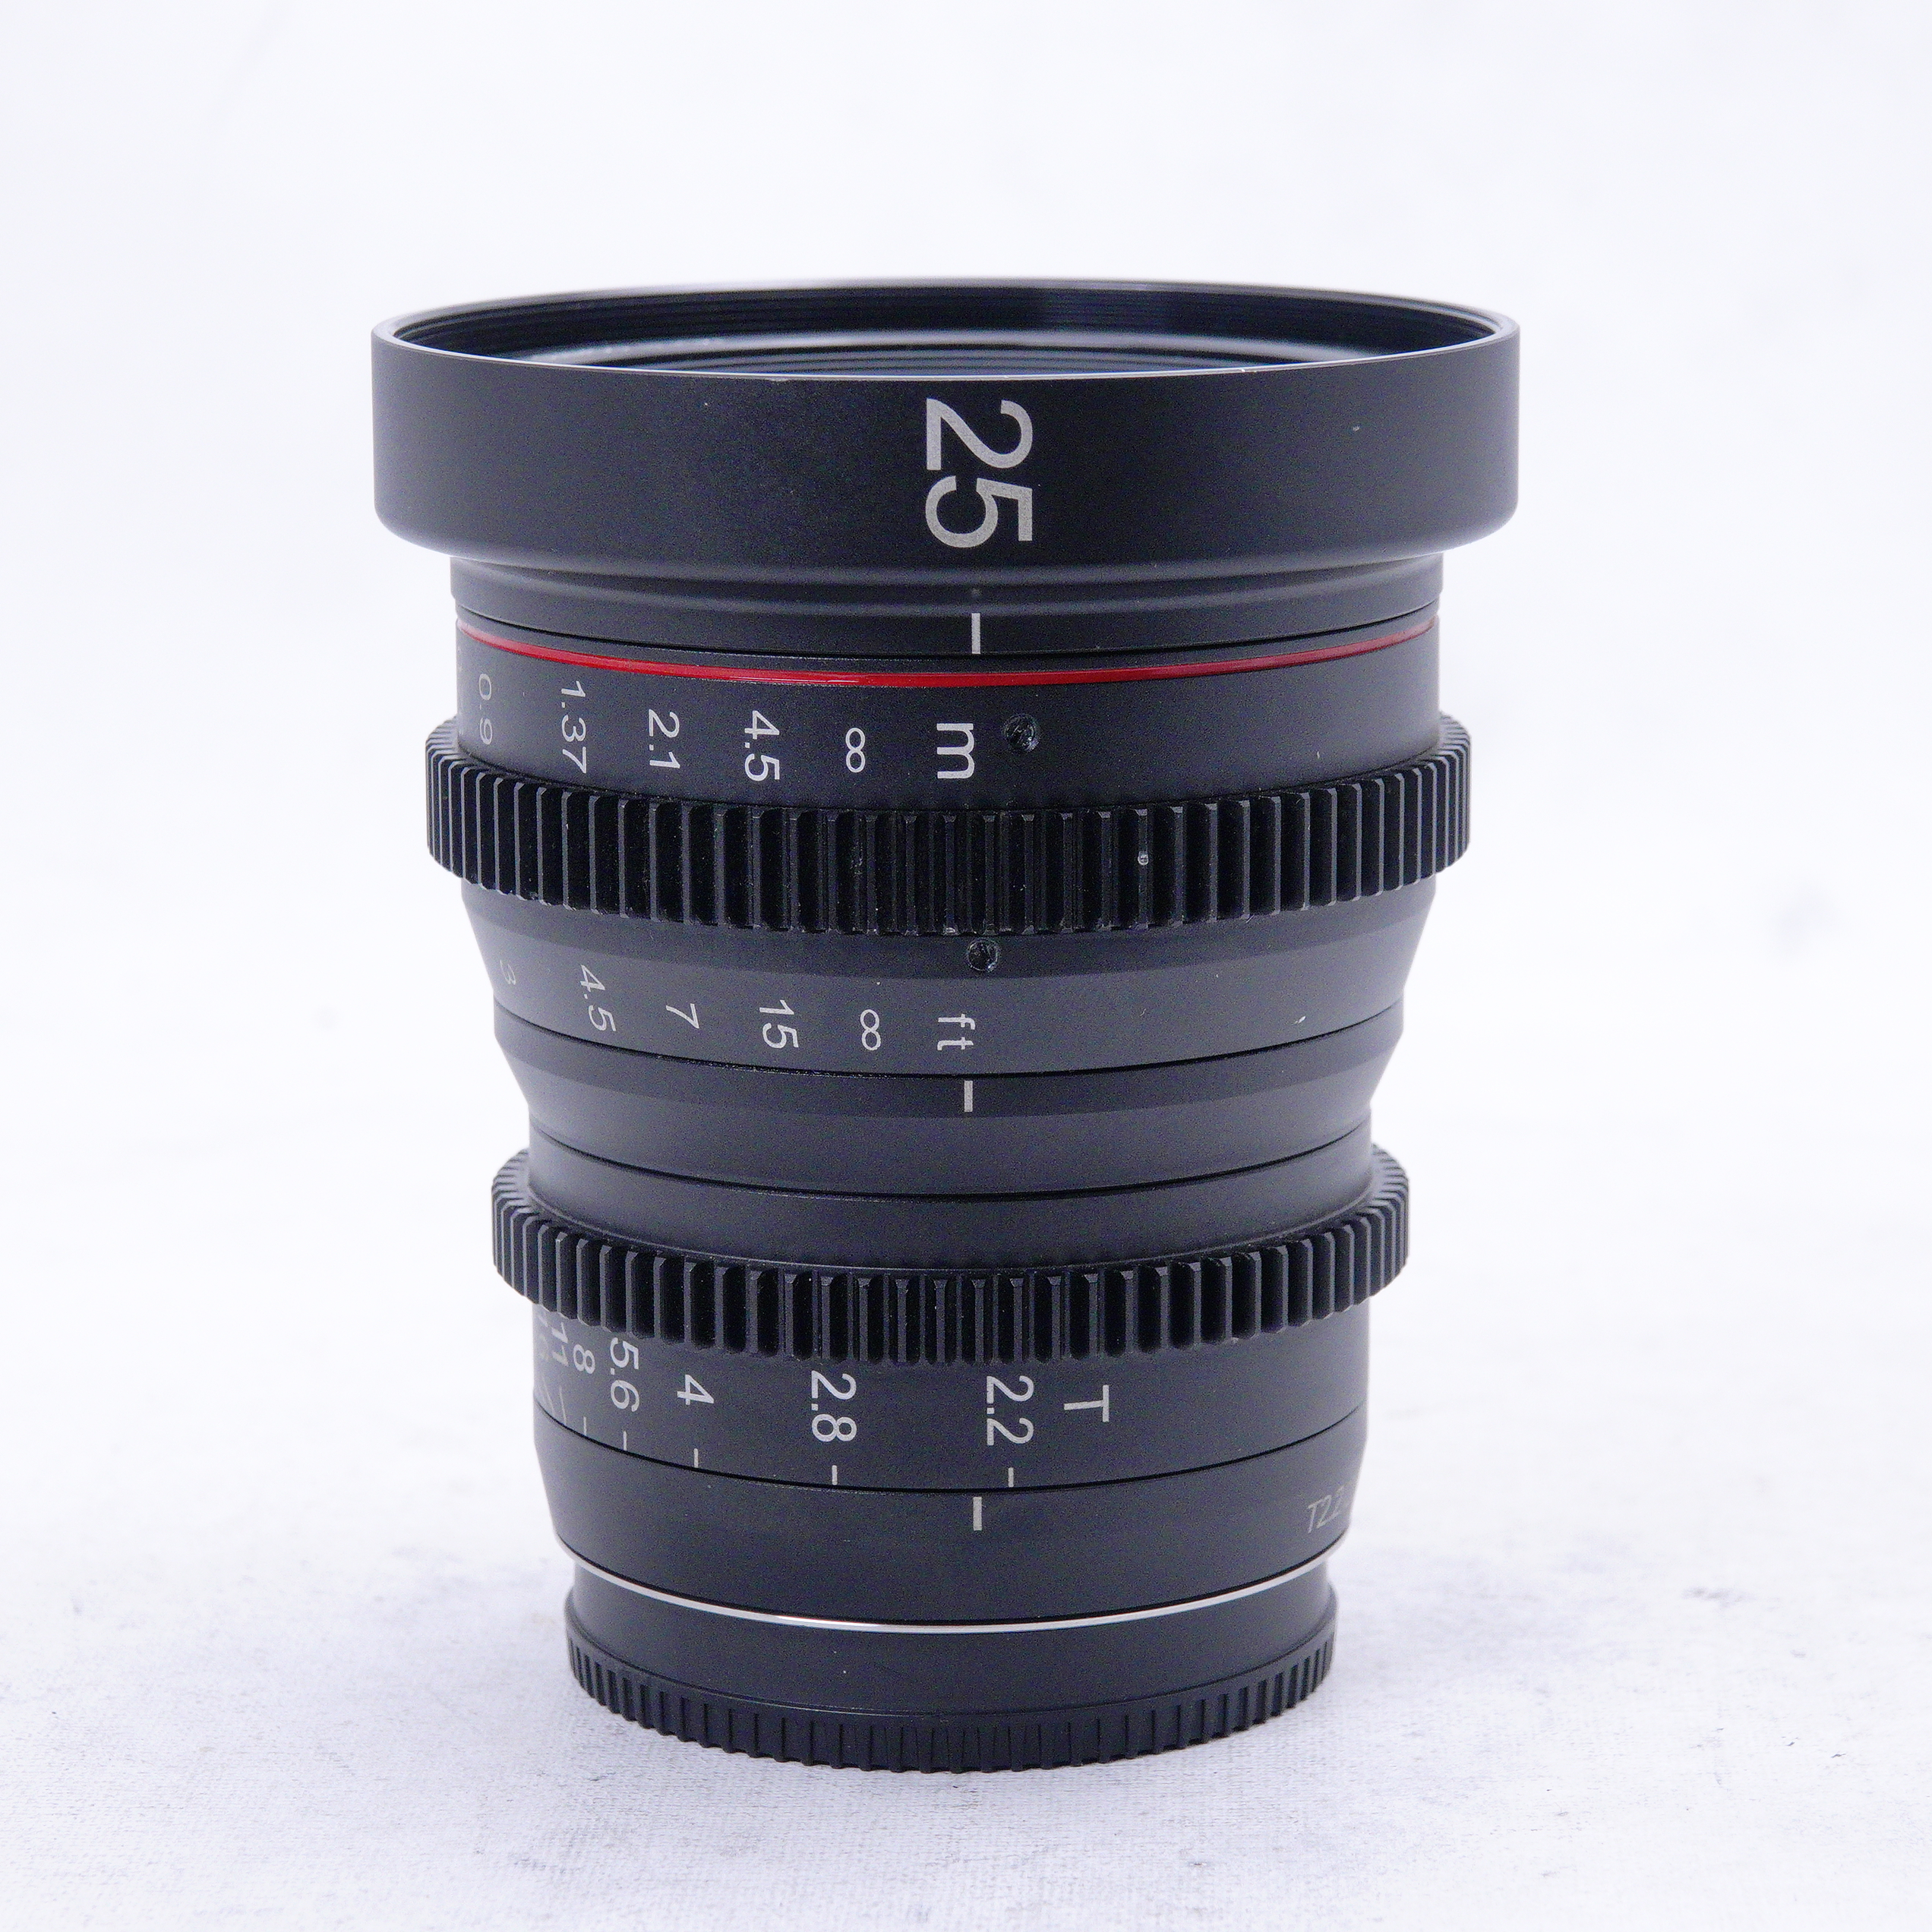 Meike 25mm T2.2 Manual Focus Cinema Lens (M4/3 Mount) - Usado